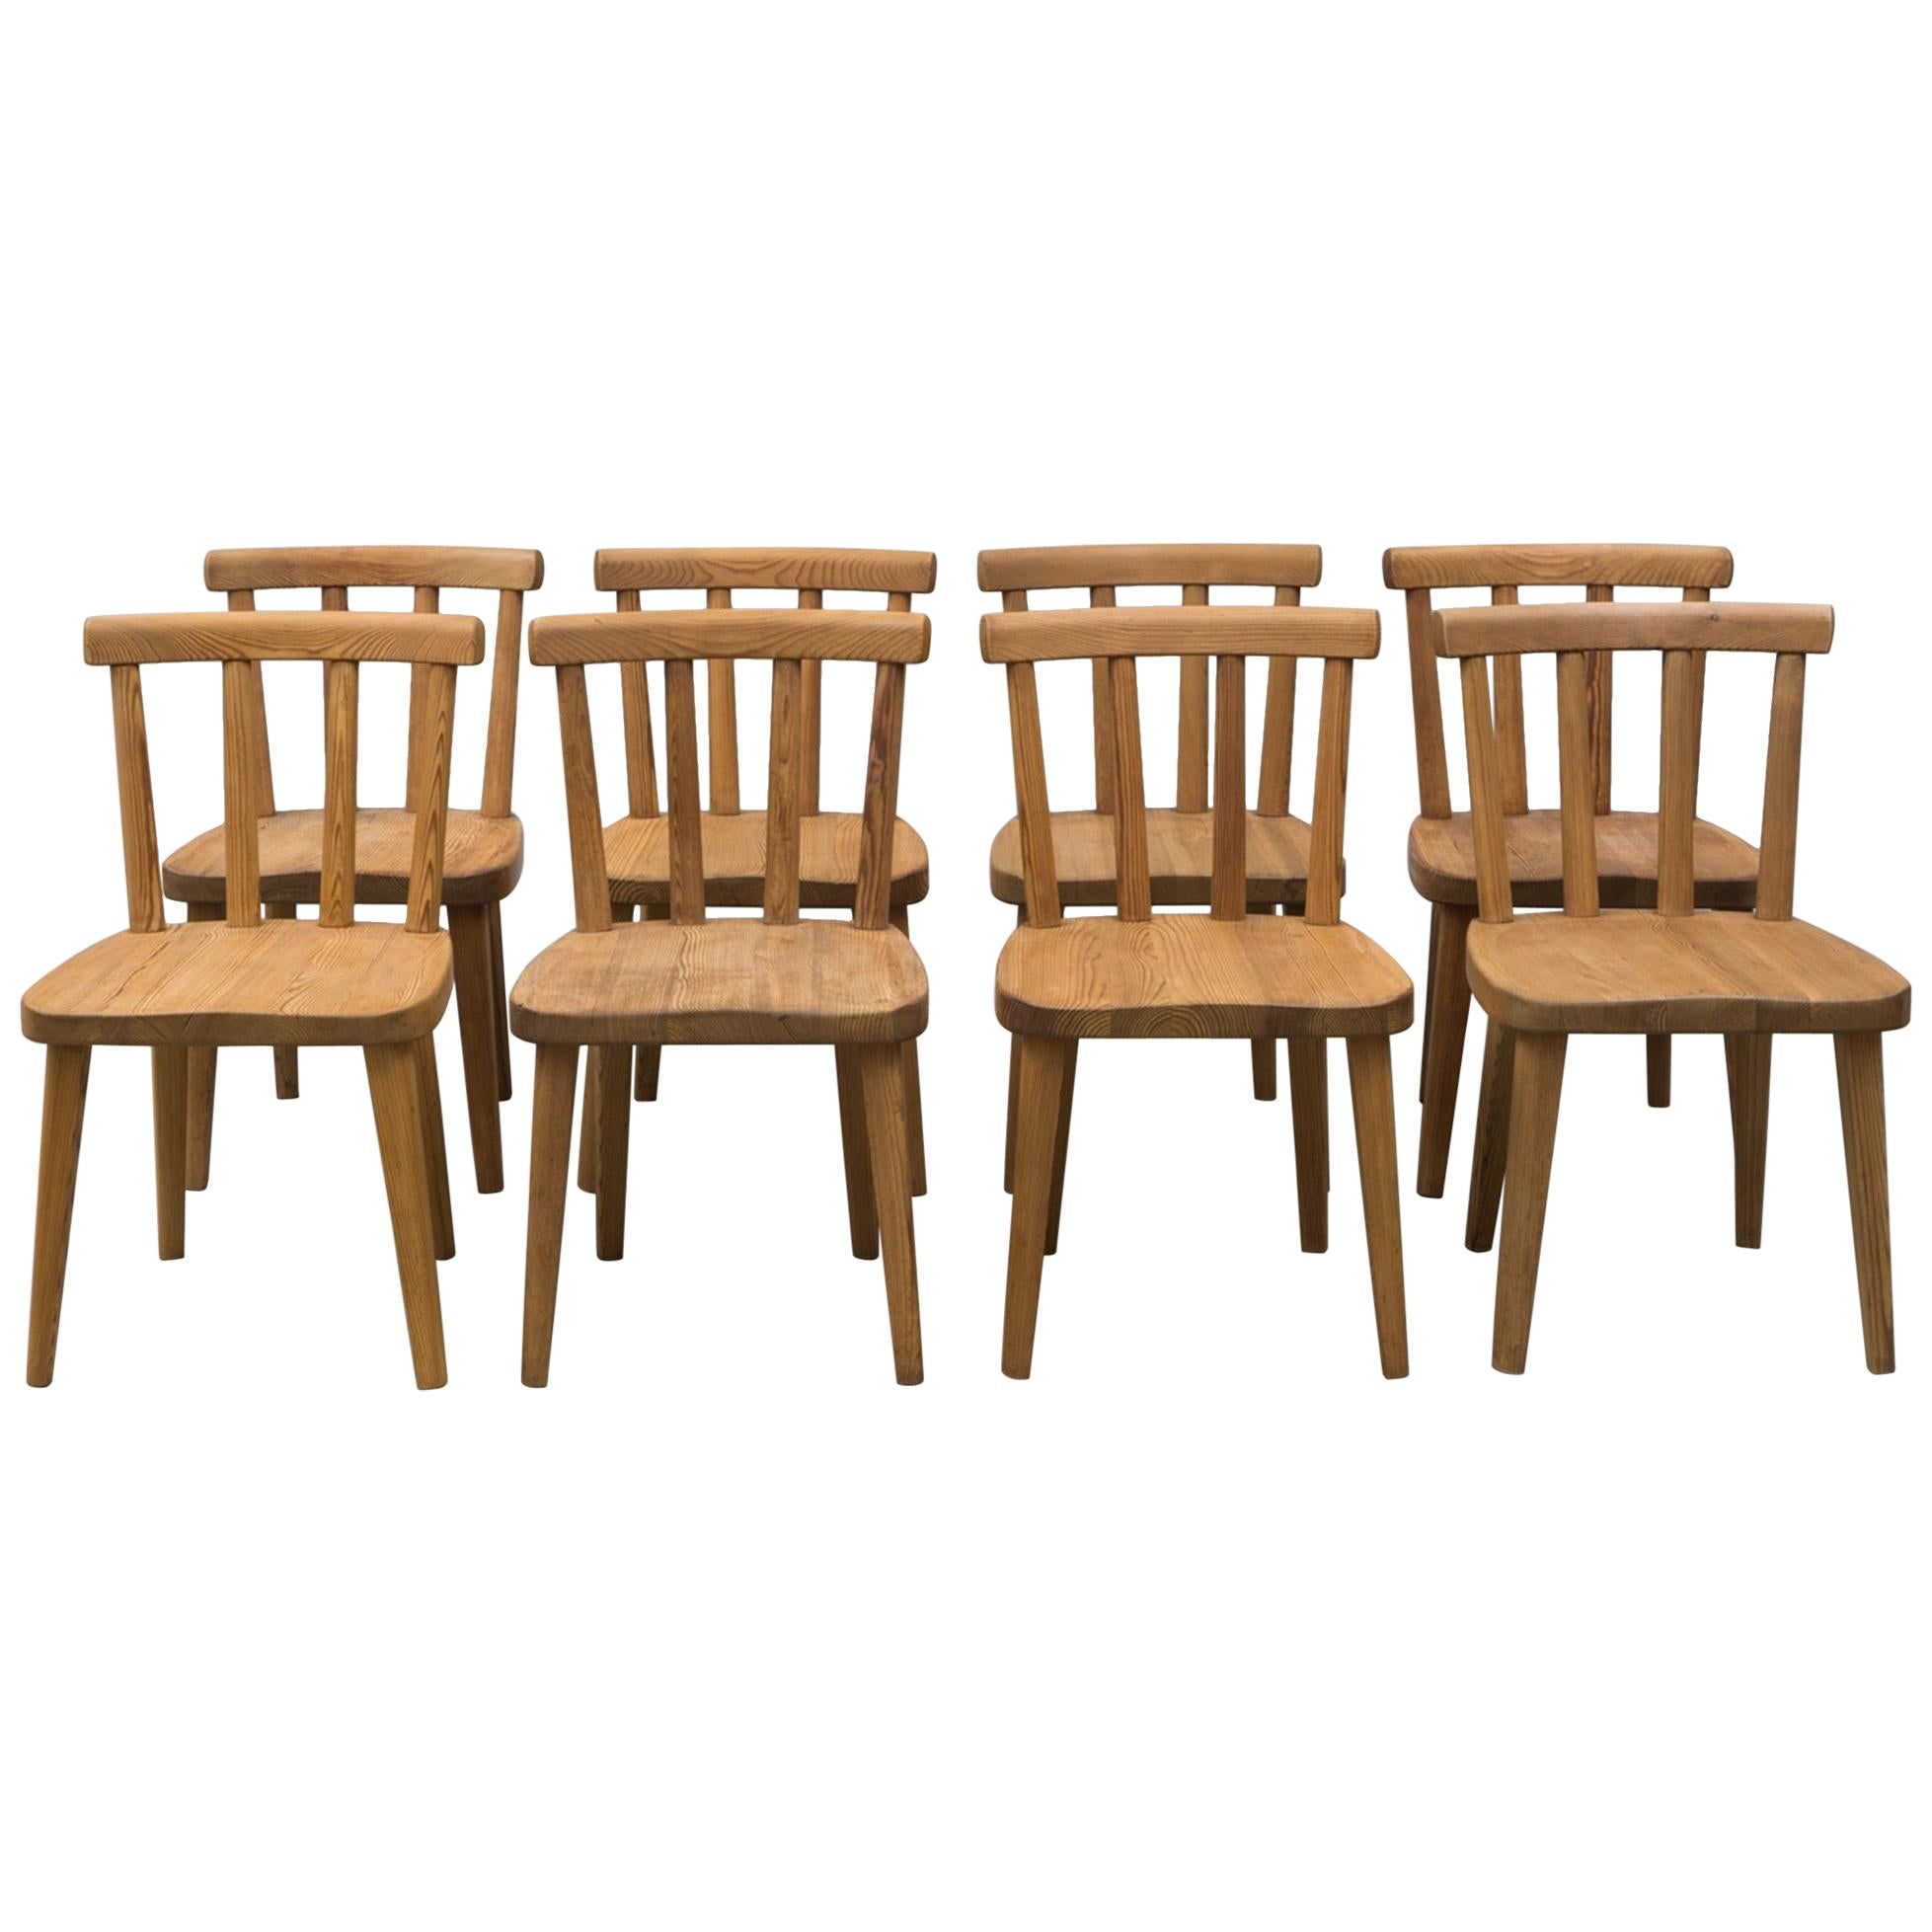 8 'Uto' Chairs by Axel Einar Hjorth, Nordics Kompaniet Sweden, 1930